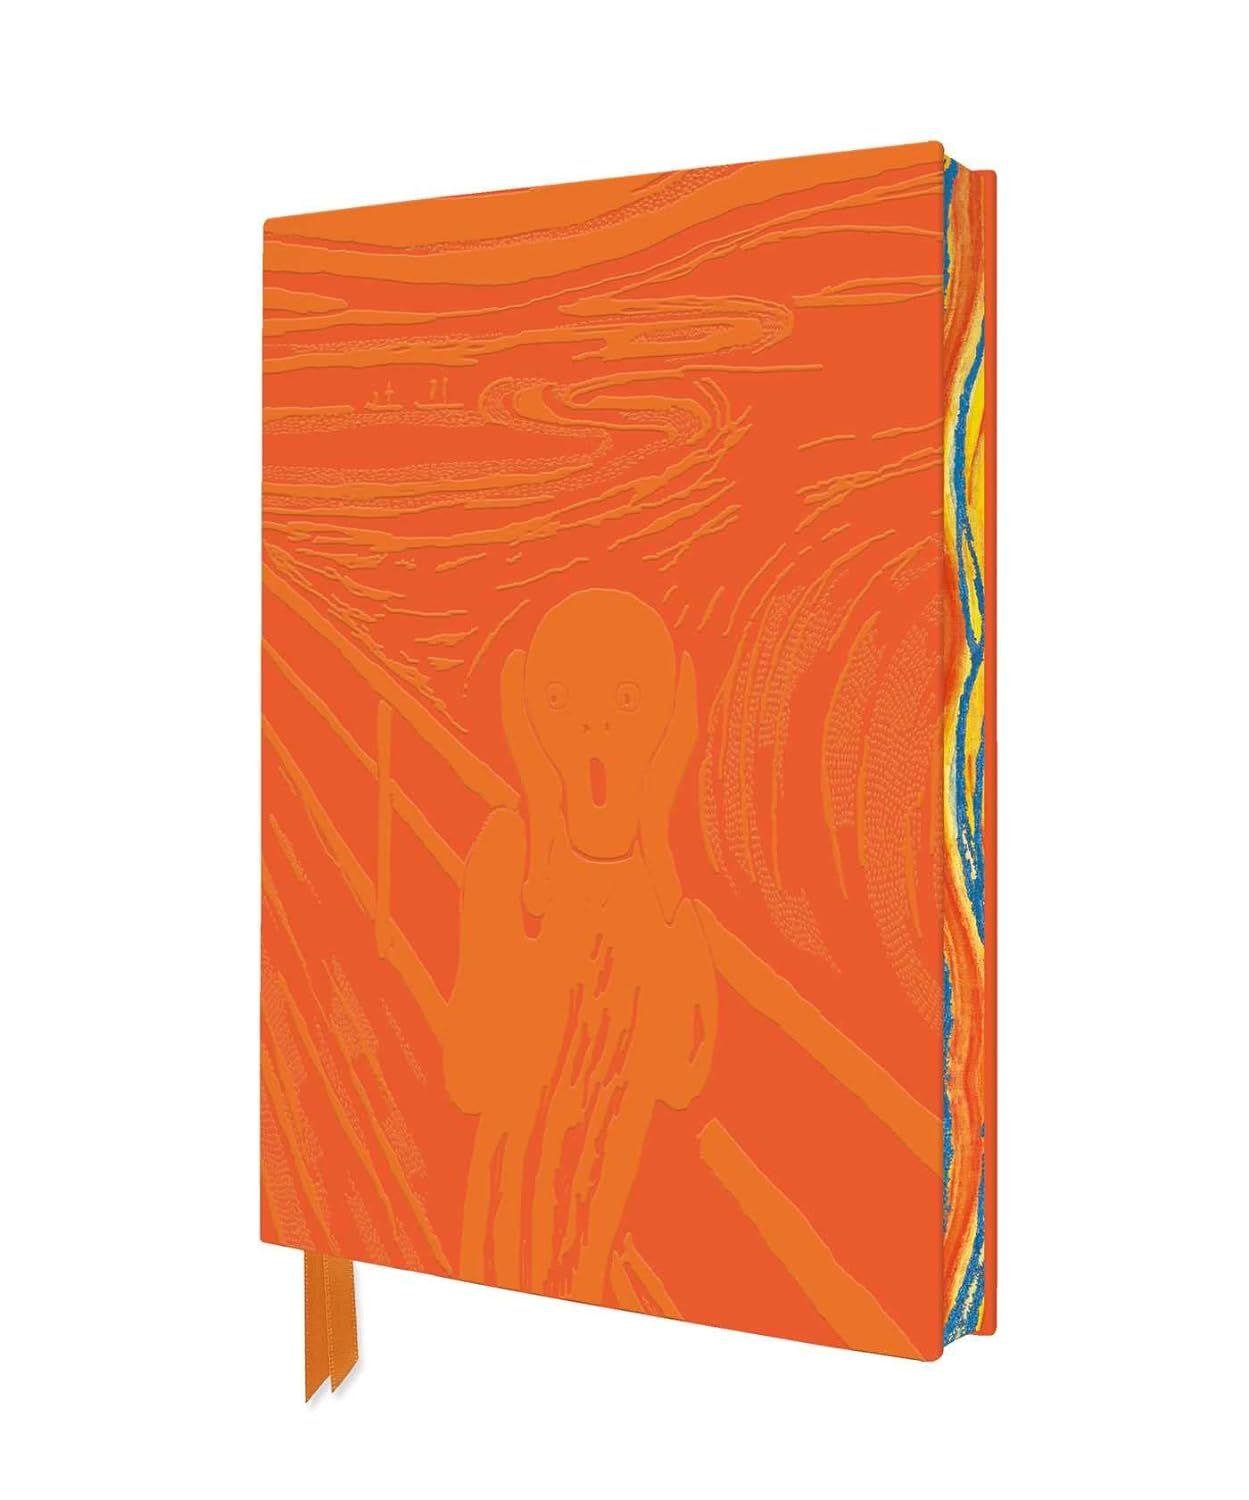 Edvard Munch: The Scream Notebooks